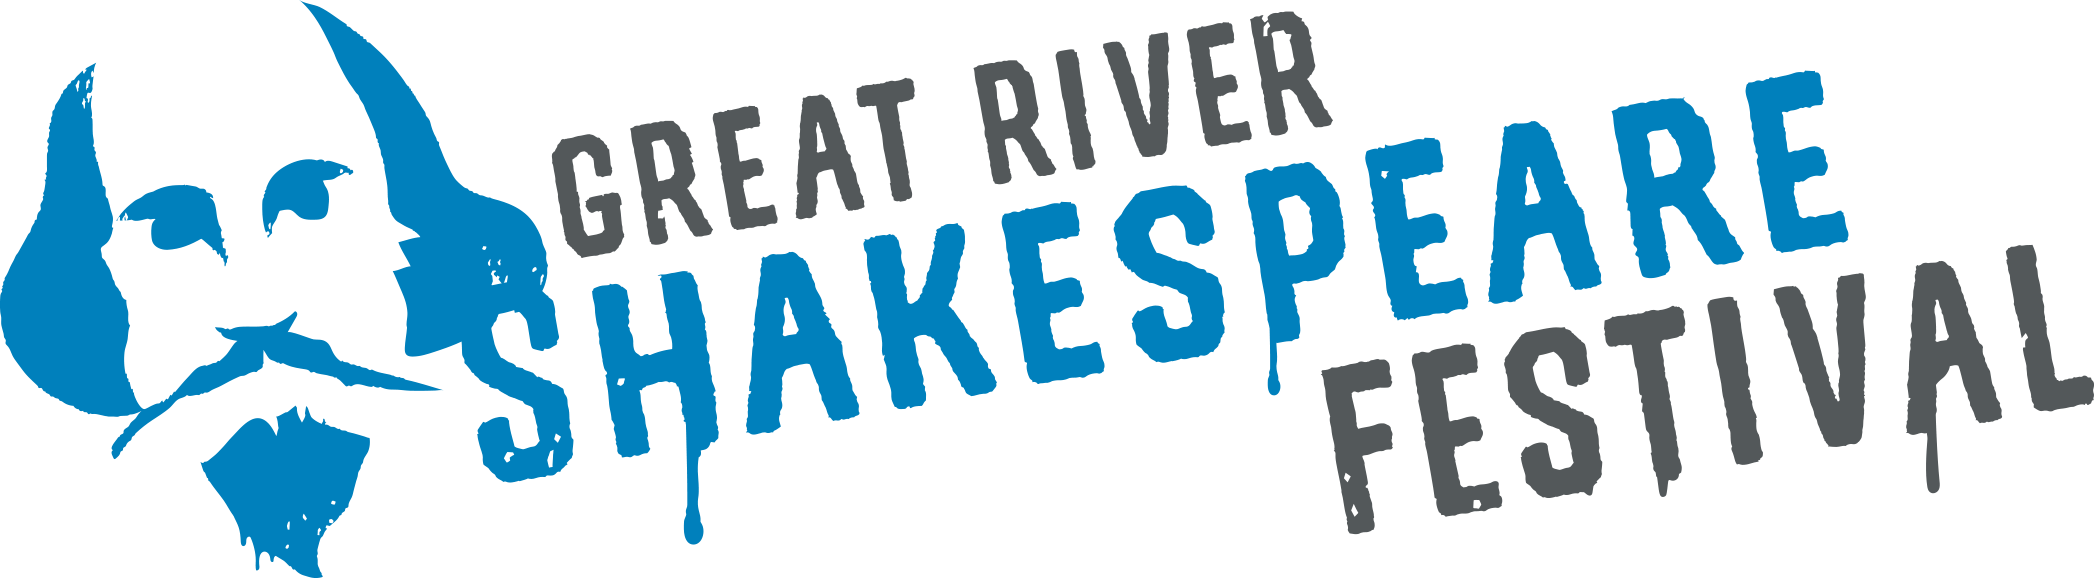 Great River Shakespeare Festival Logo PNG